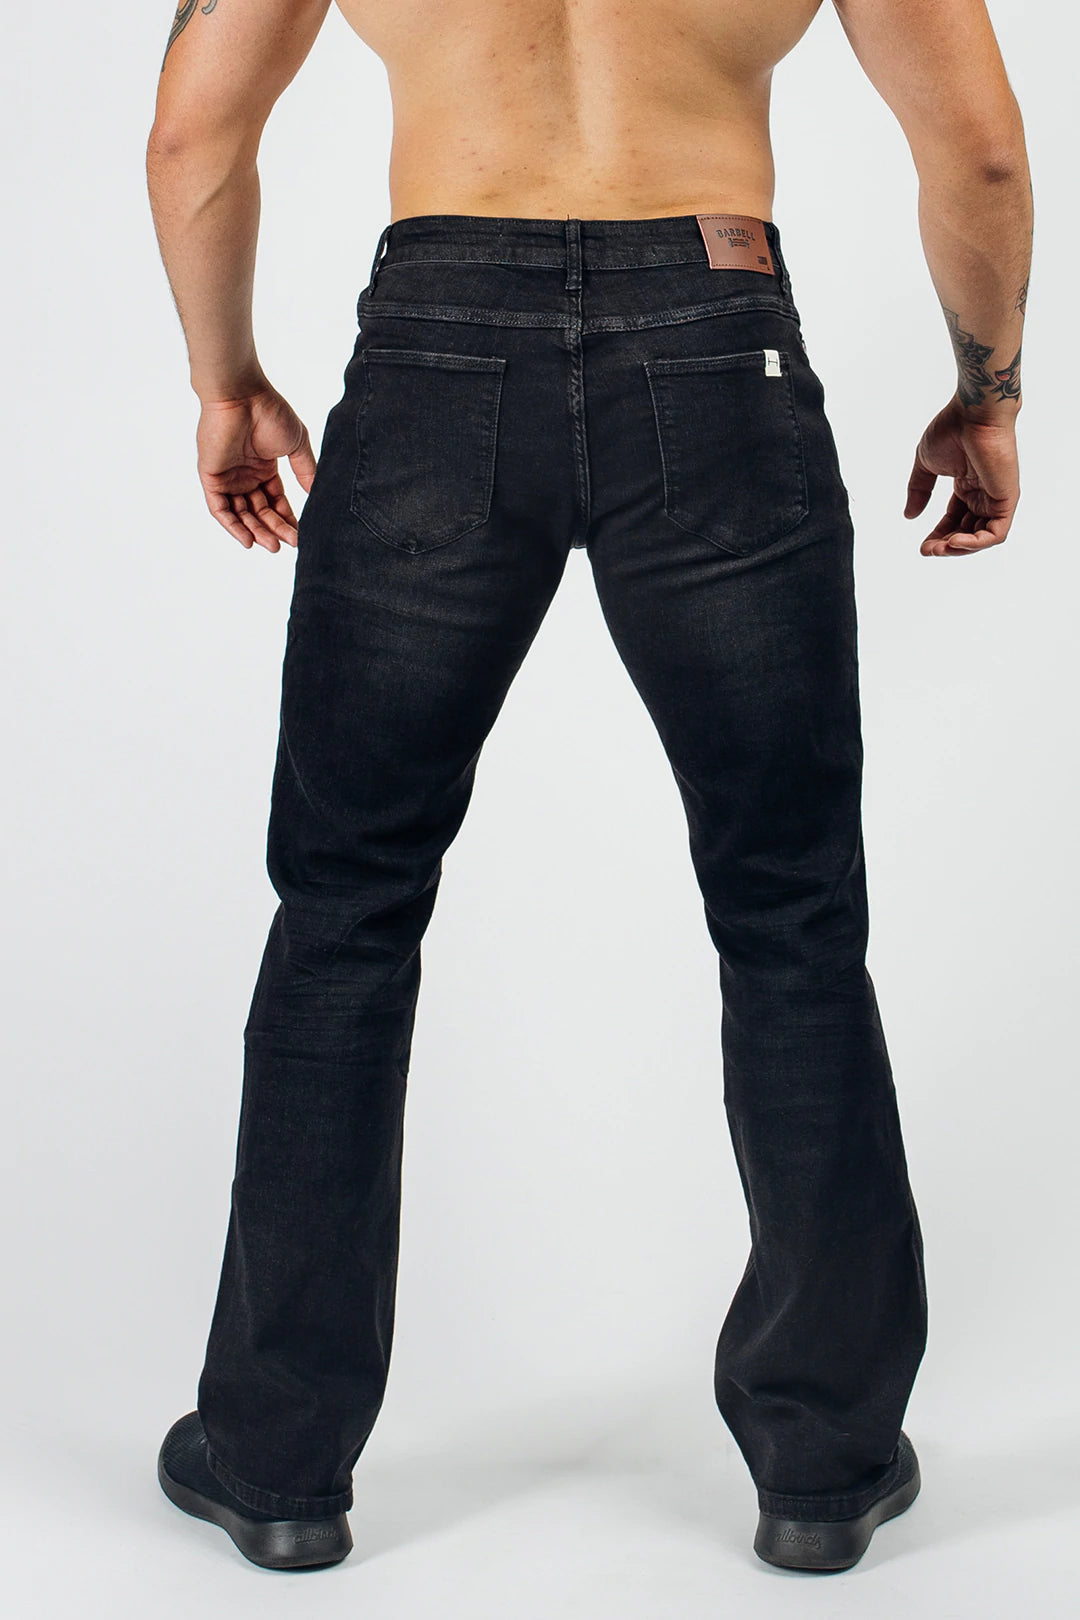 Black Bootcut jeans for Men | Lyst